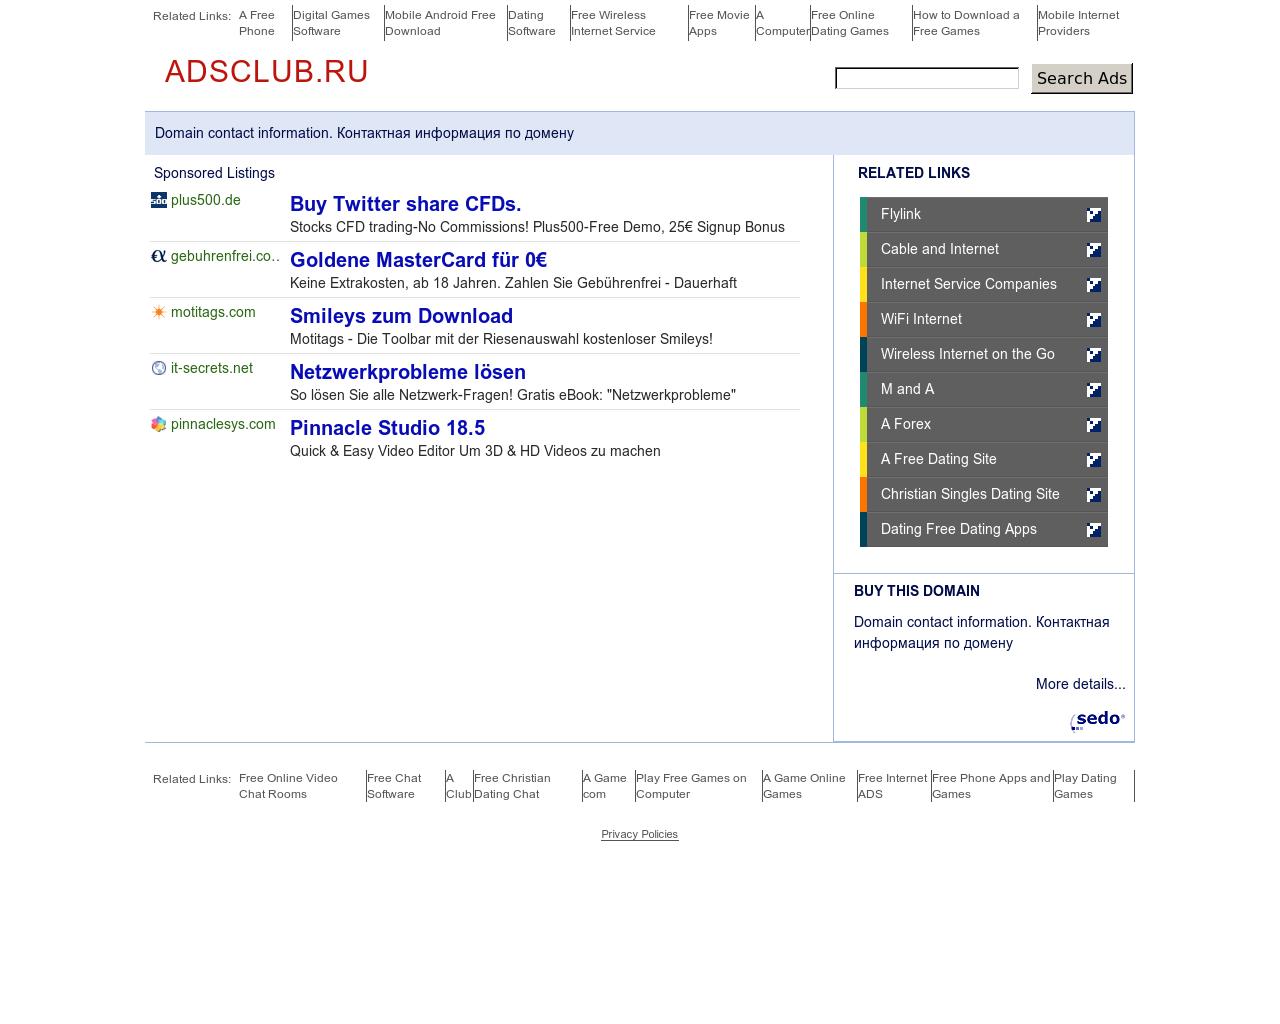 Изображение сайта adsclub.ru в разрешении 1280x1024